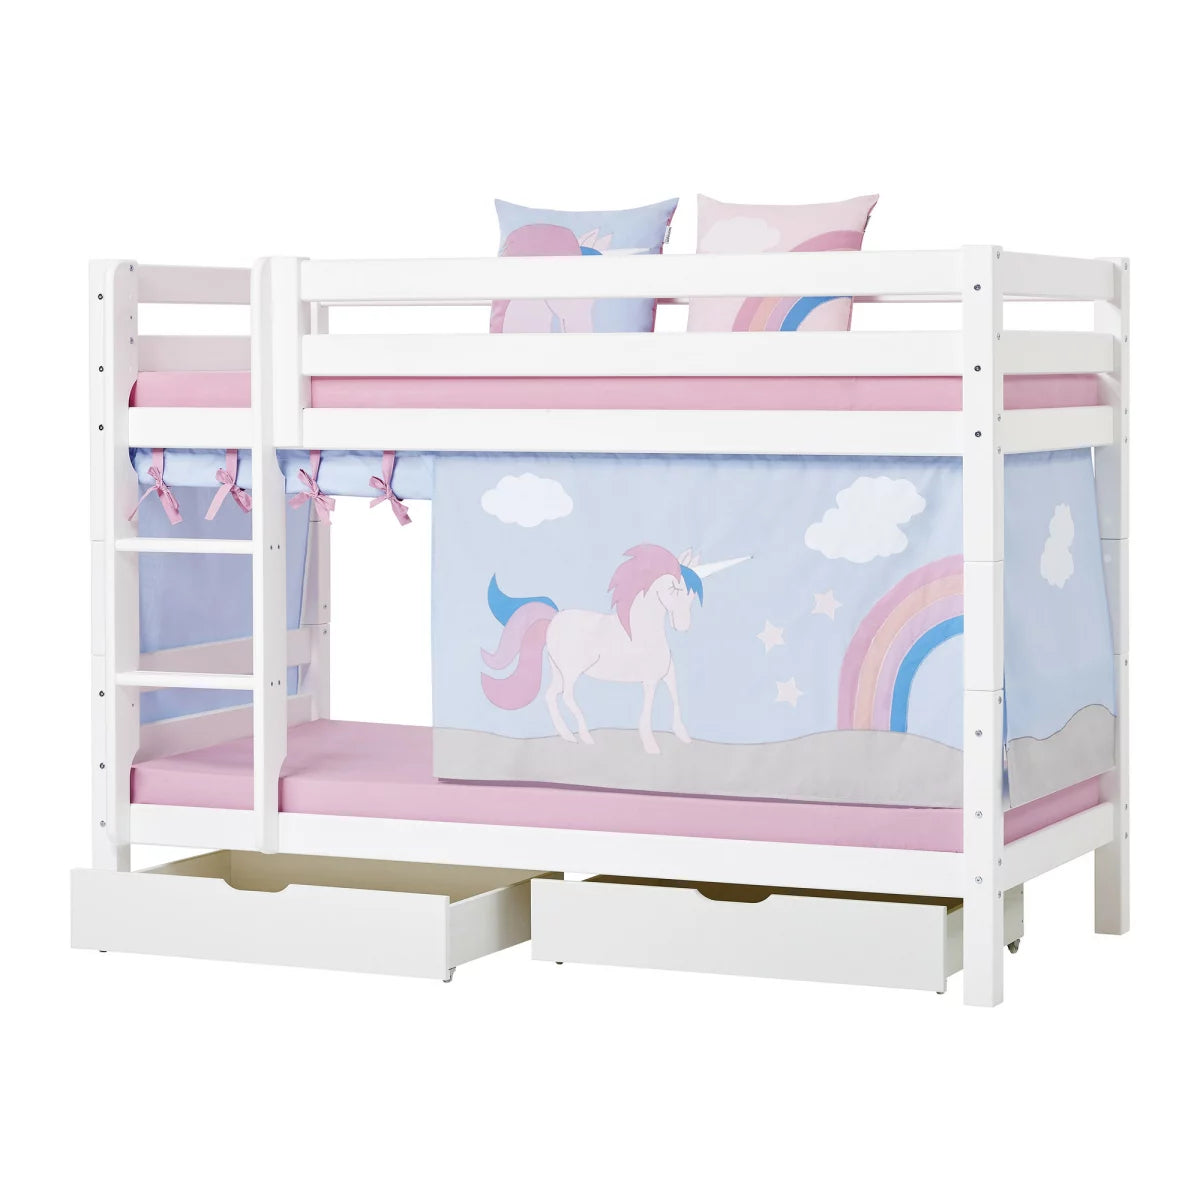 Eco Luxury Bunk Bed / Διπλή κουκέτα μειωμένου ύψους